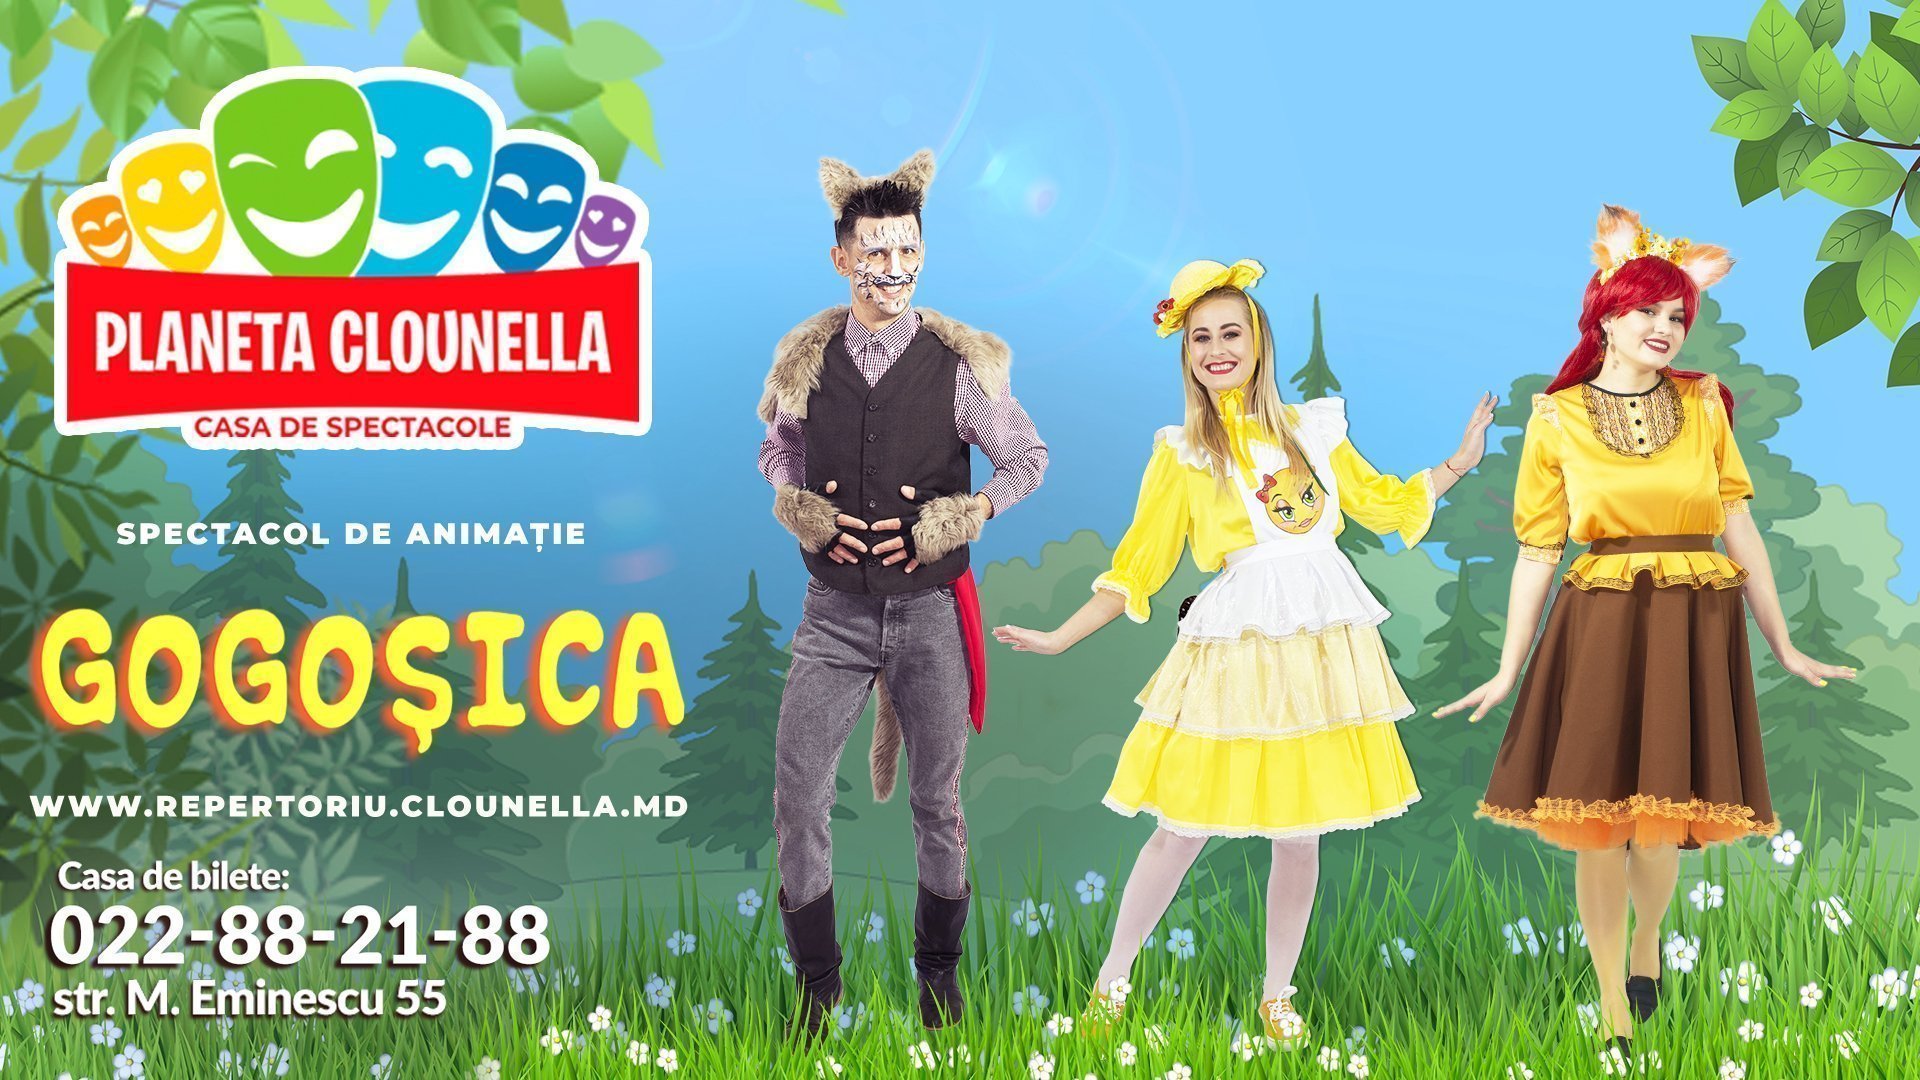 Gogosica - Spectacol Interactiv de Animatie pentru Copii | Februarie 2020 | +3